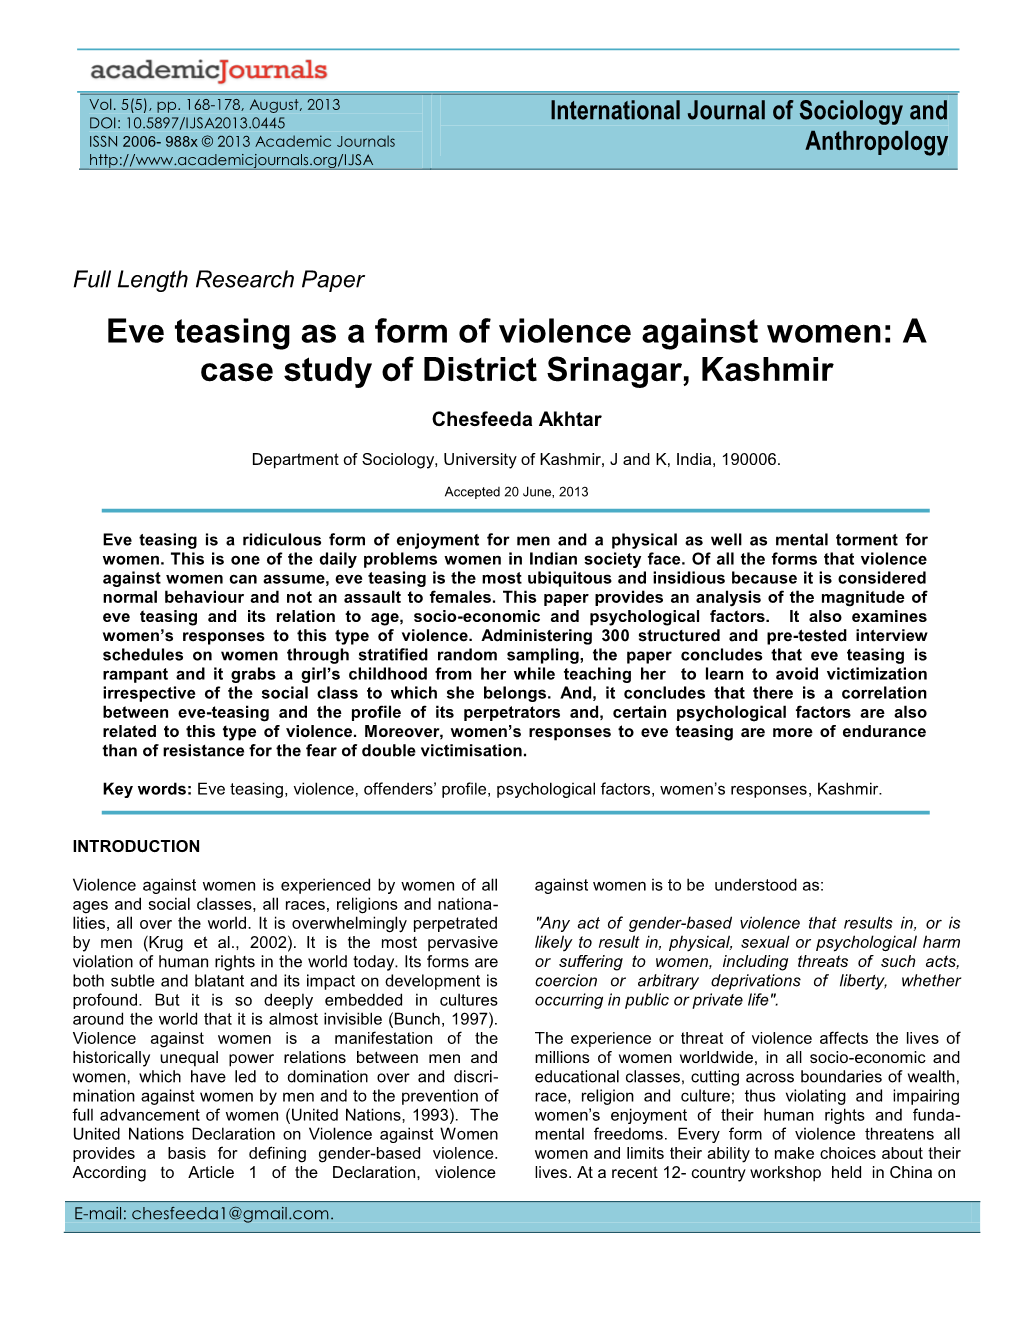 Eve Teasing As a Form of Violence Against Women: a Case Study of District Srinagar, Kashmir